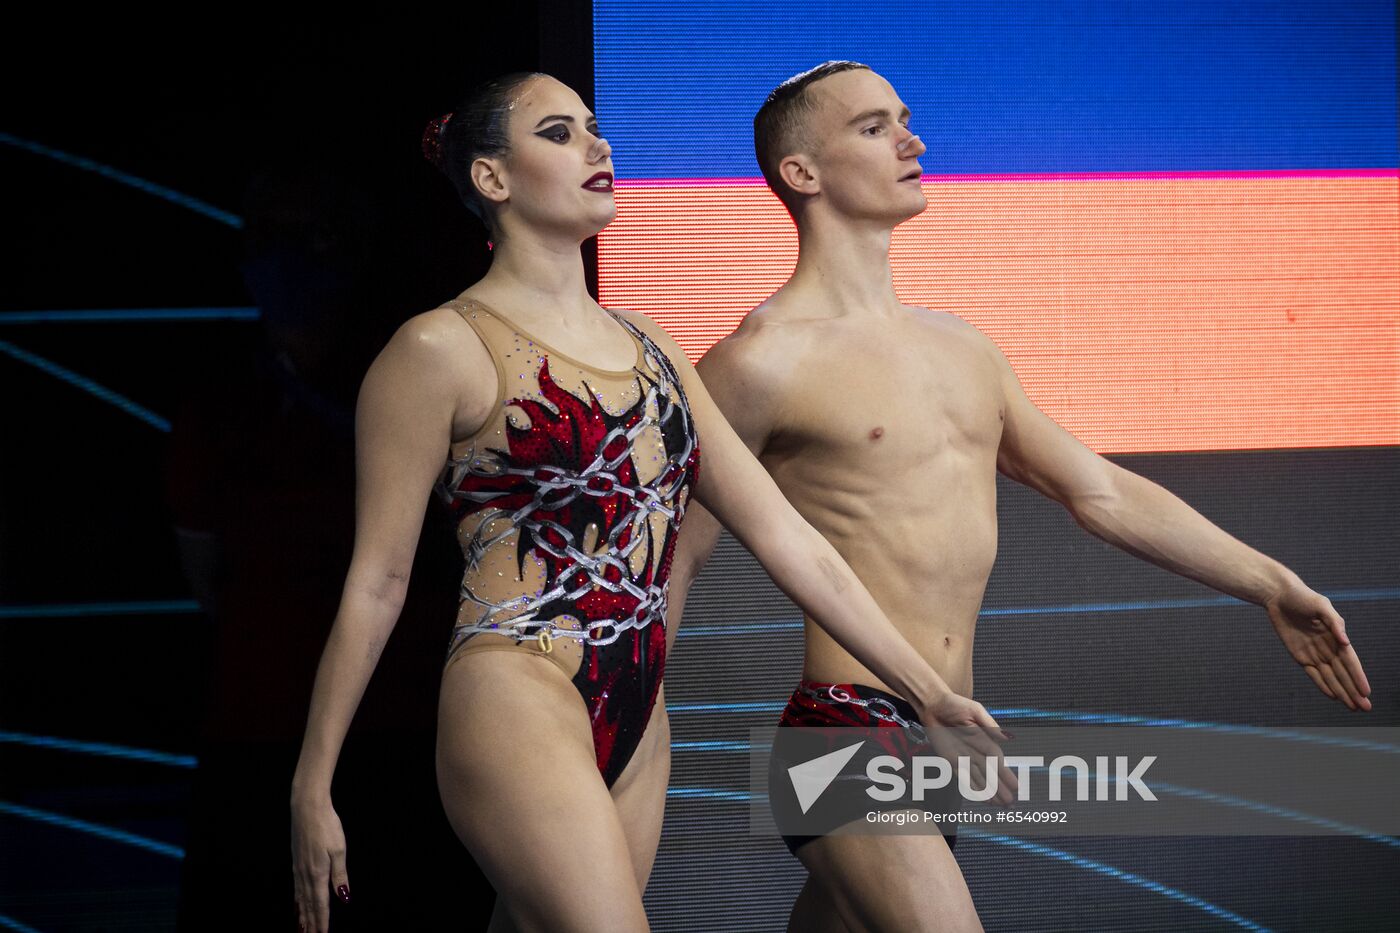 Hungary European Aquatics Championship Artistic Swimming Mixed Duet Technical